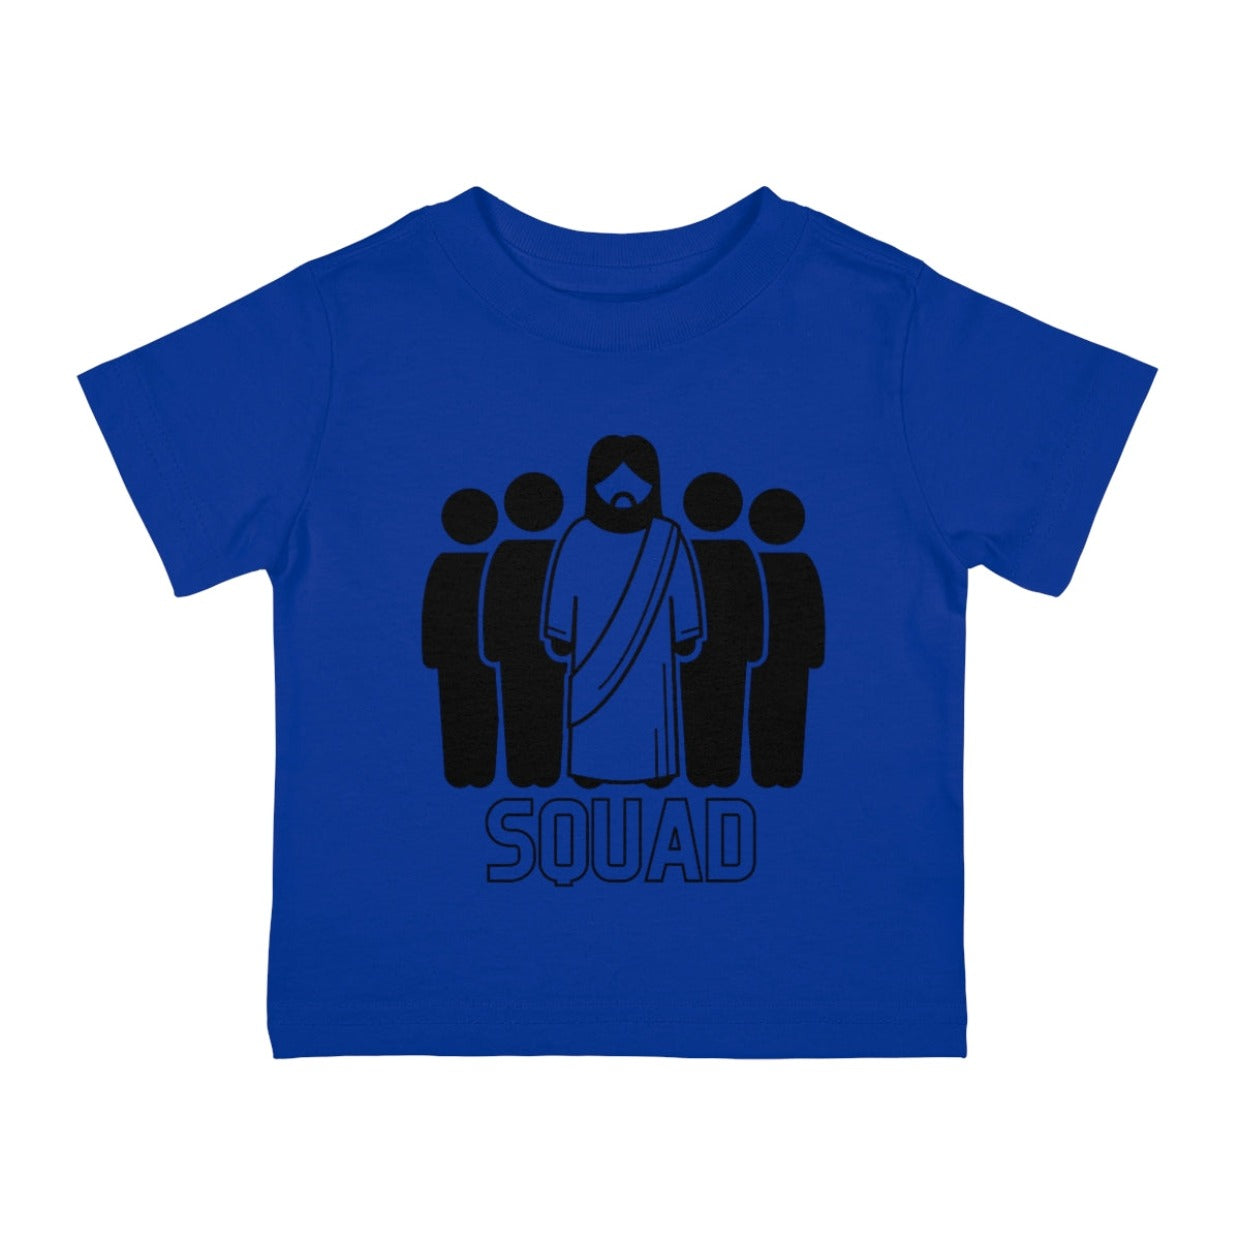 Squad - Infant Tee 6M-24M | LifeSpring Shirts - LifeSpring Shirts